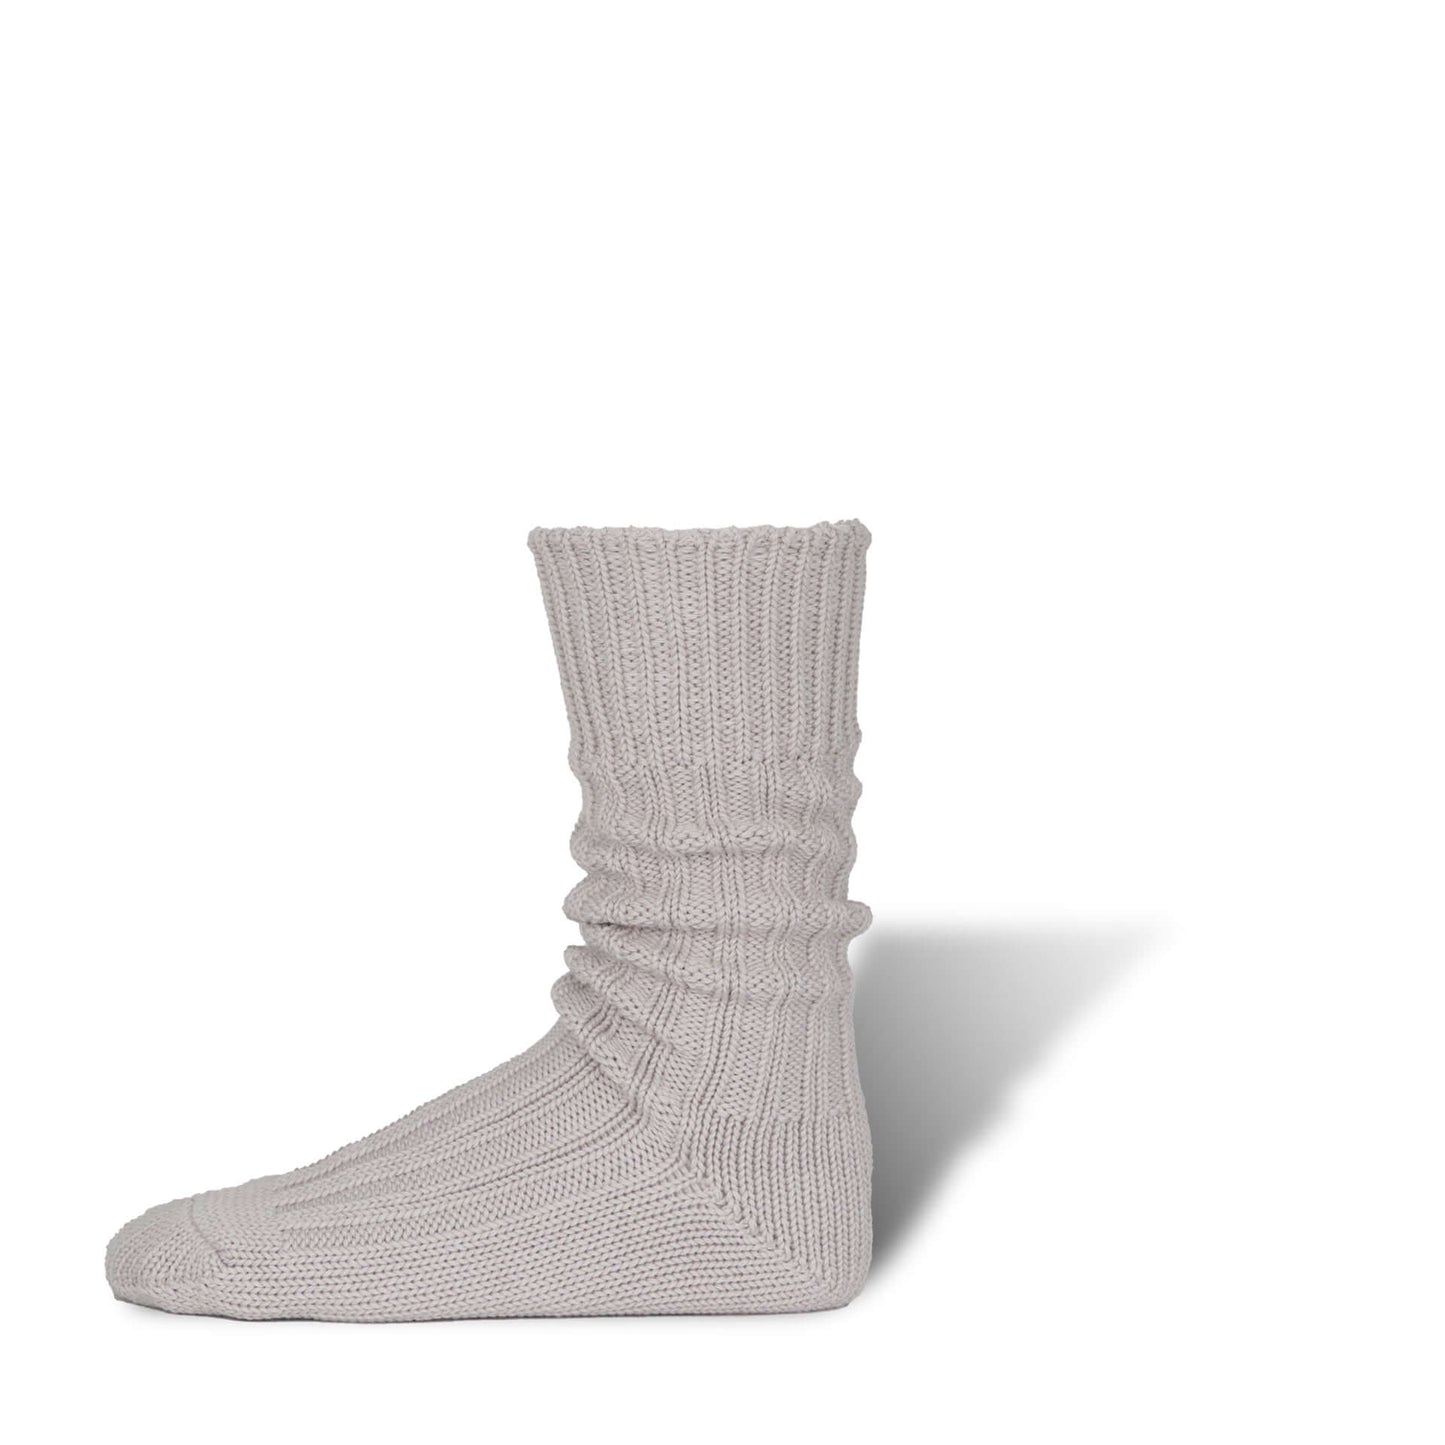 Cased Heavyweight Plain Socks -1st Collection-